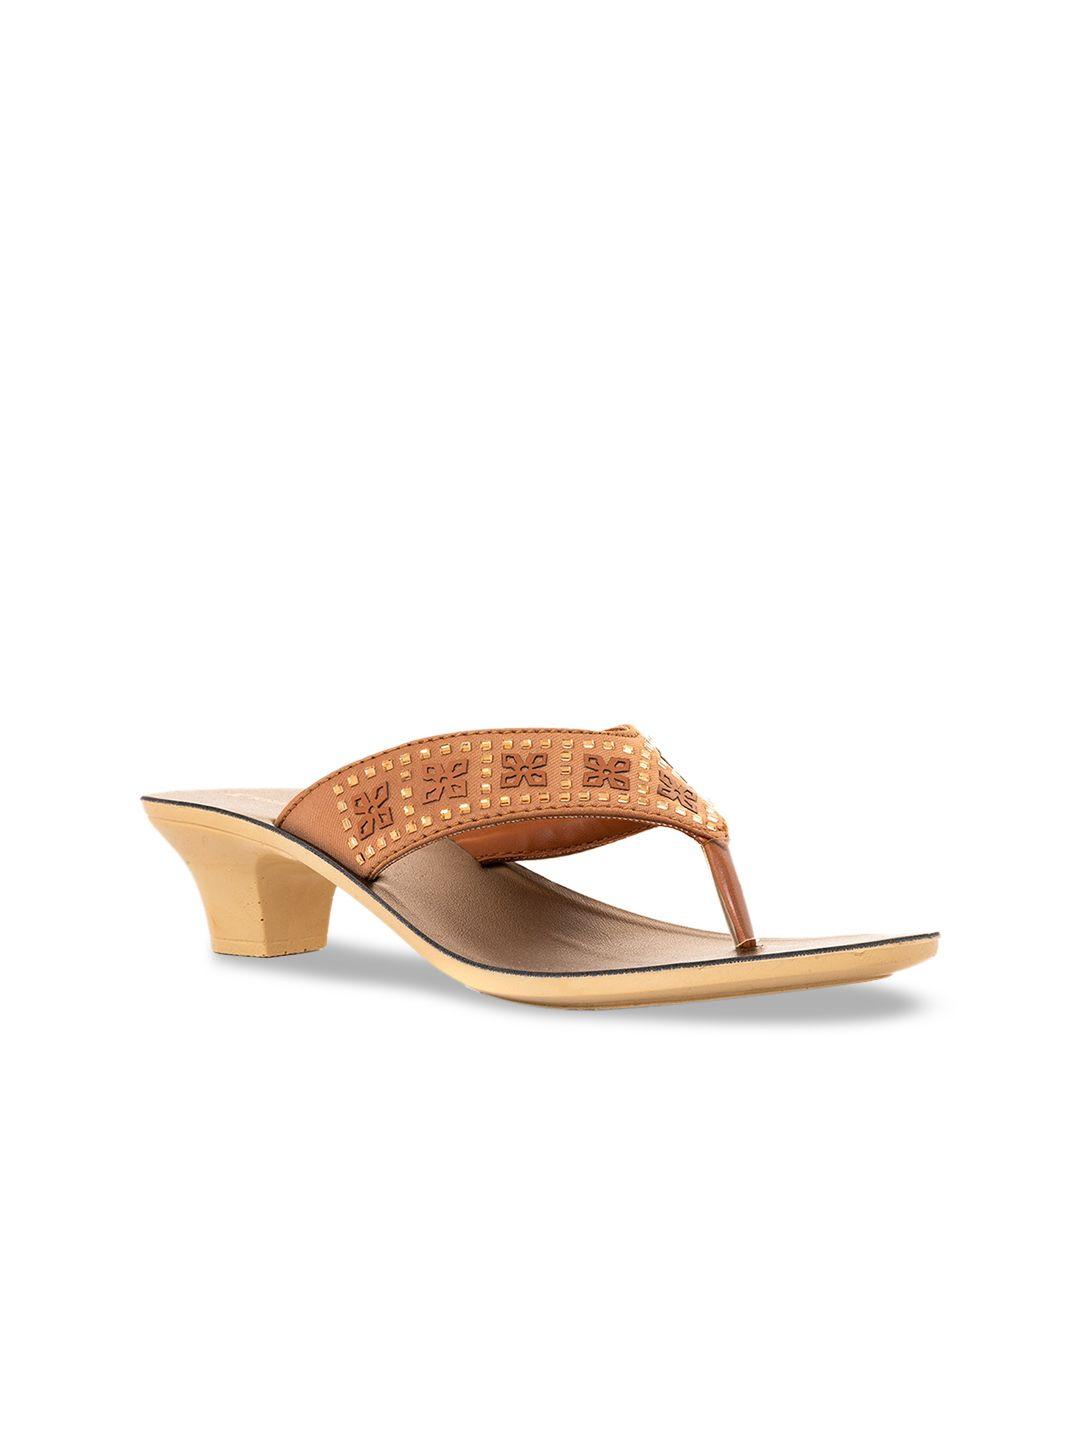 khadims embellished open toe block heels